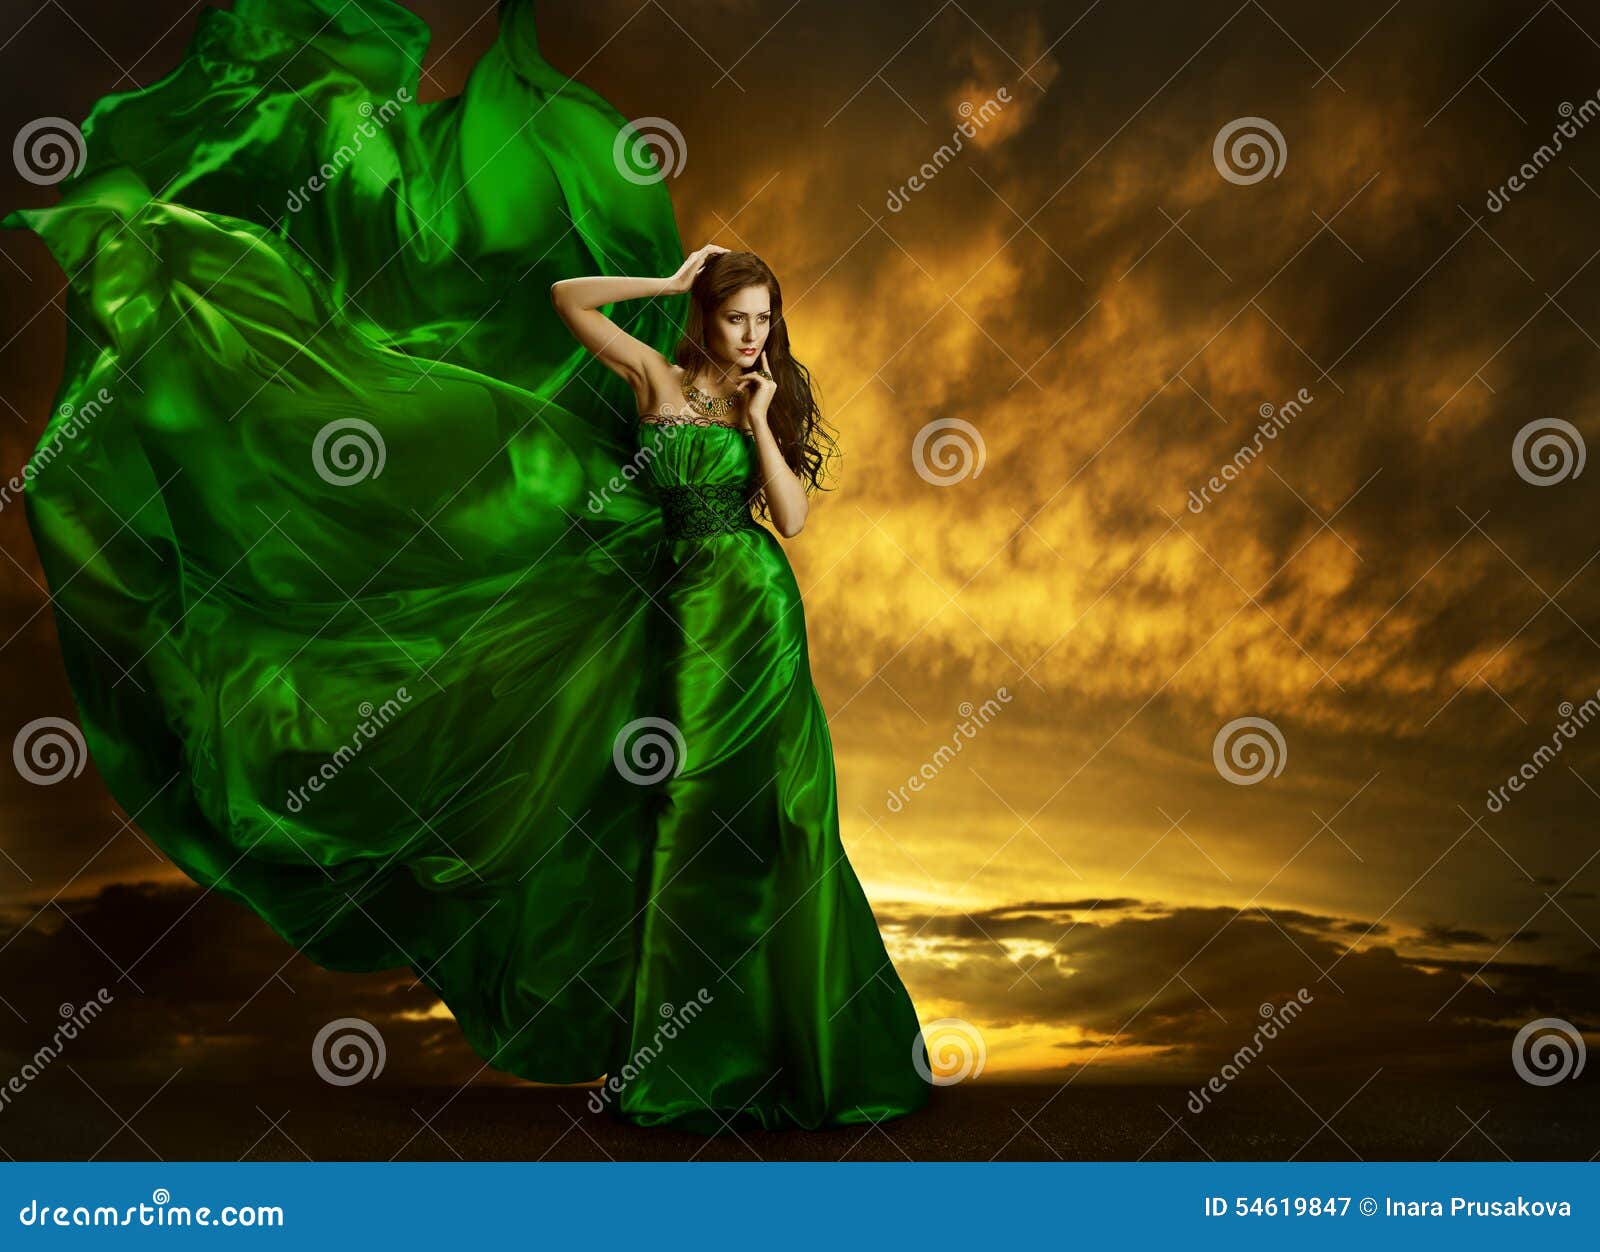 woman fashion dress fluttering wind, green silk gown fabric